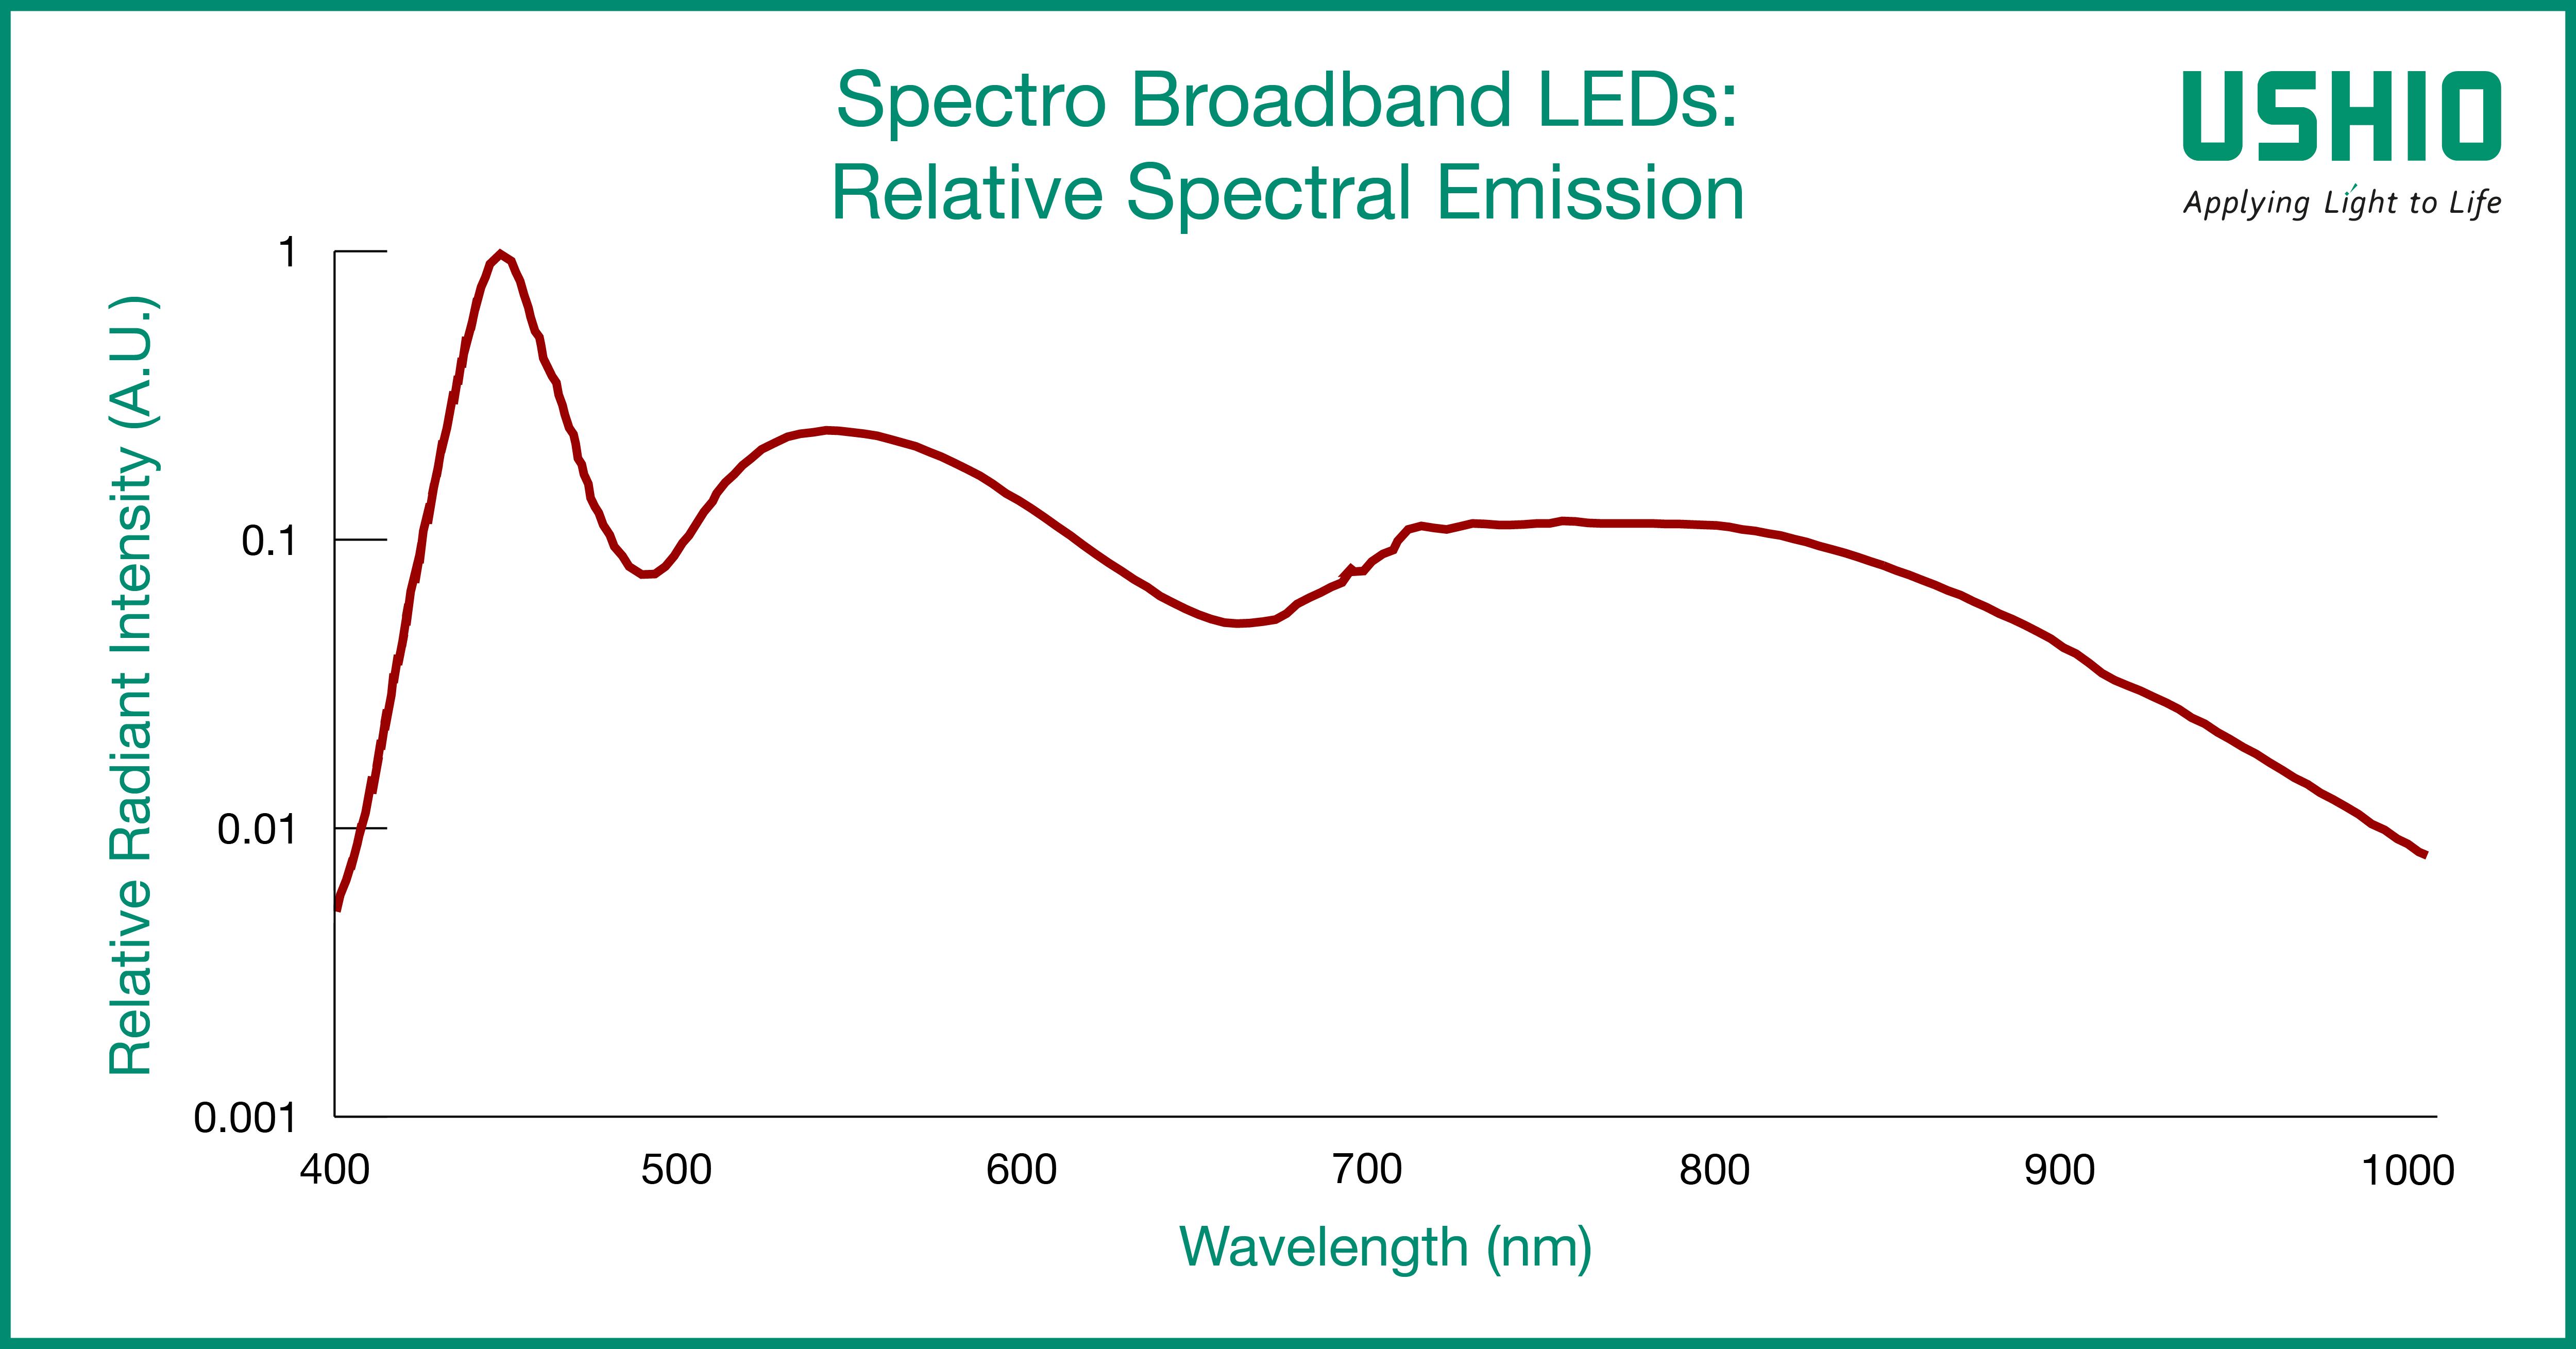 Ushio’s Spectro Broadband LED Breaks Own Output Power World Record